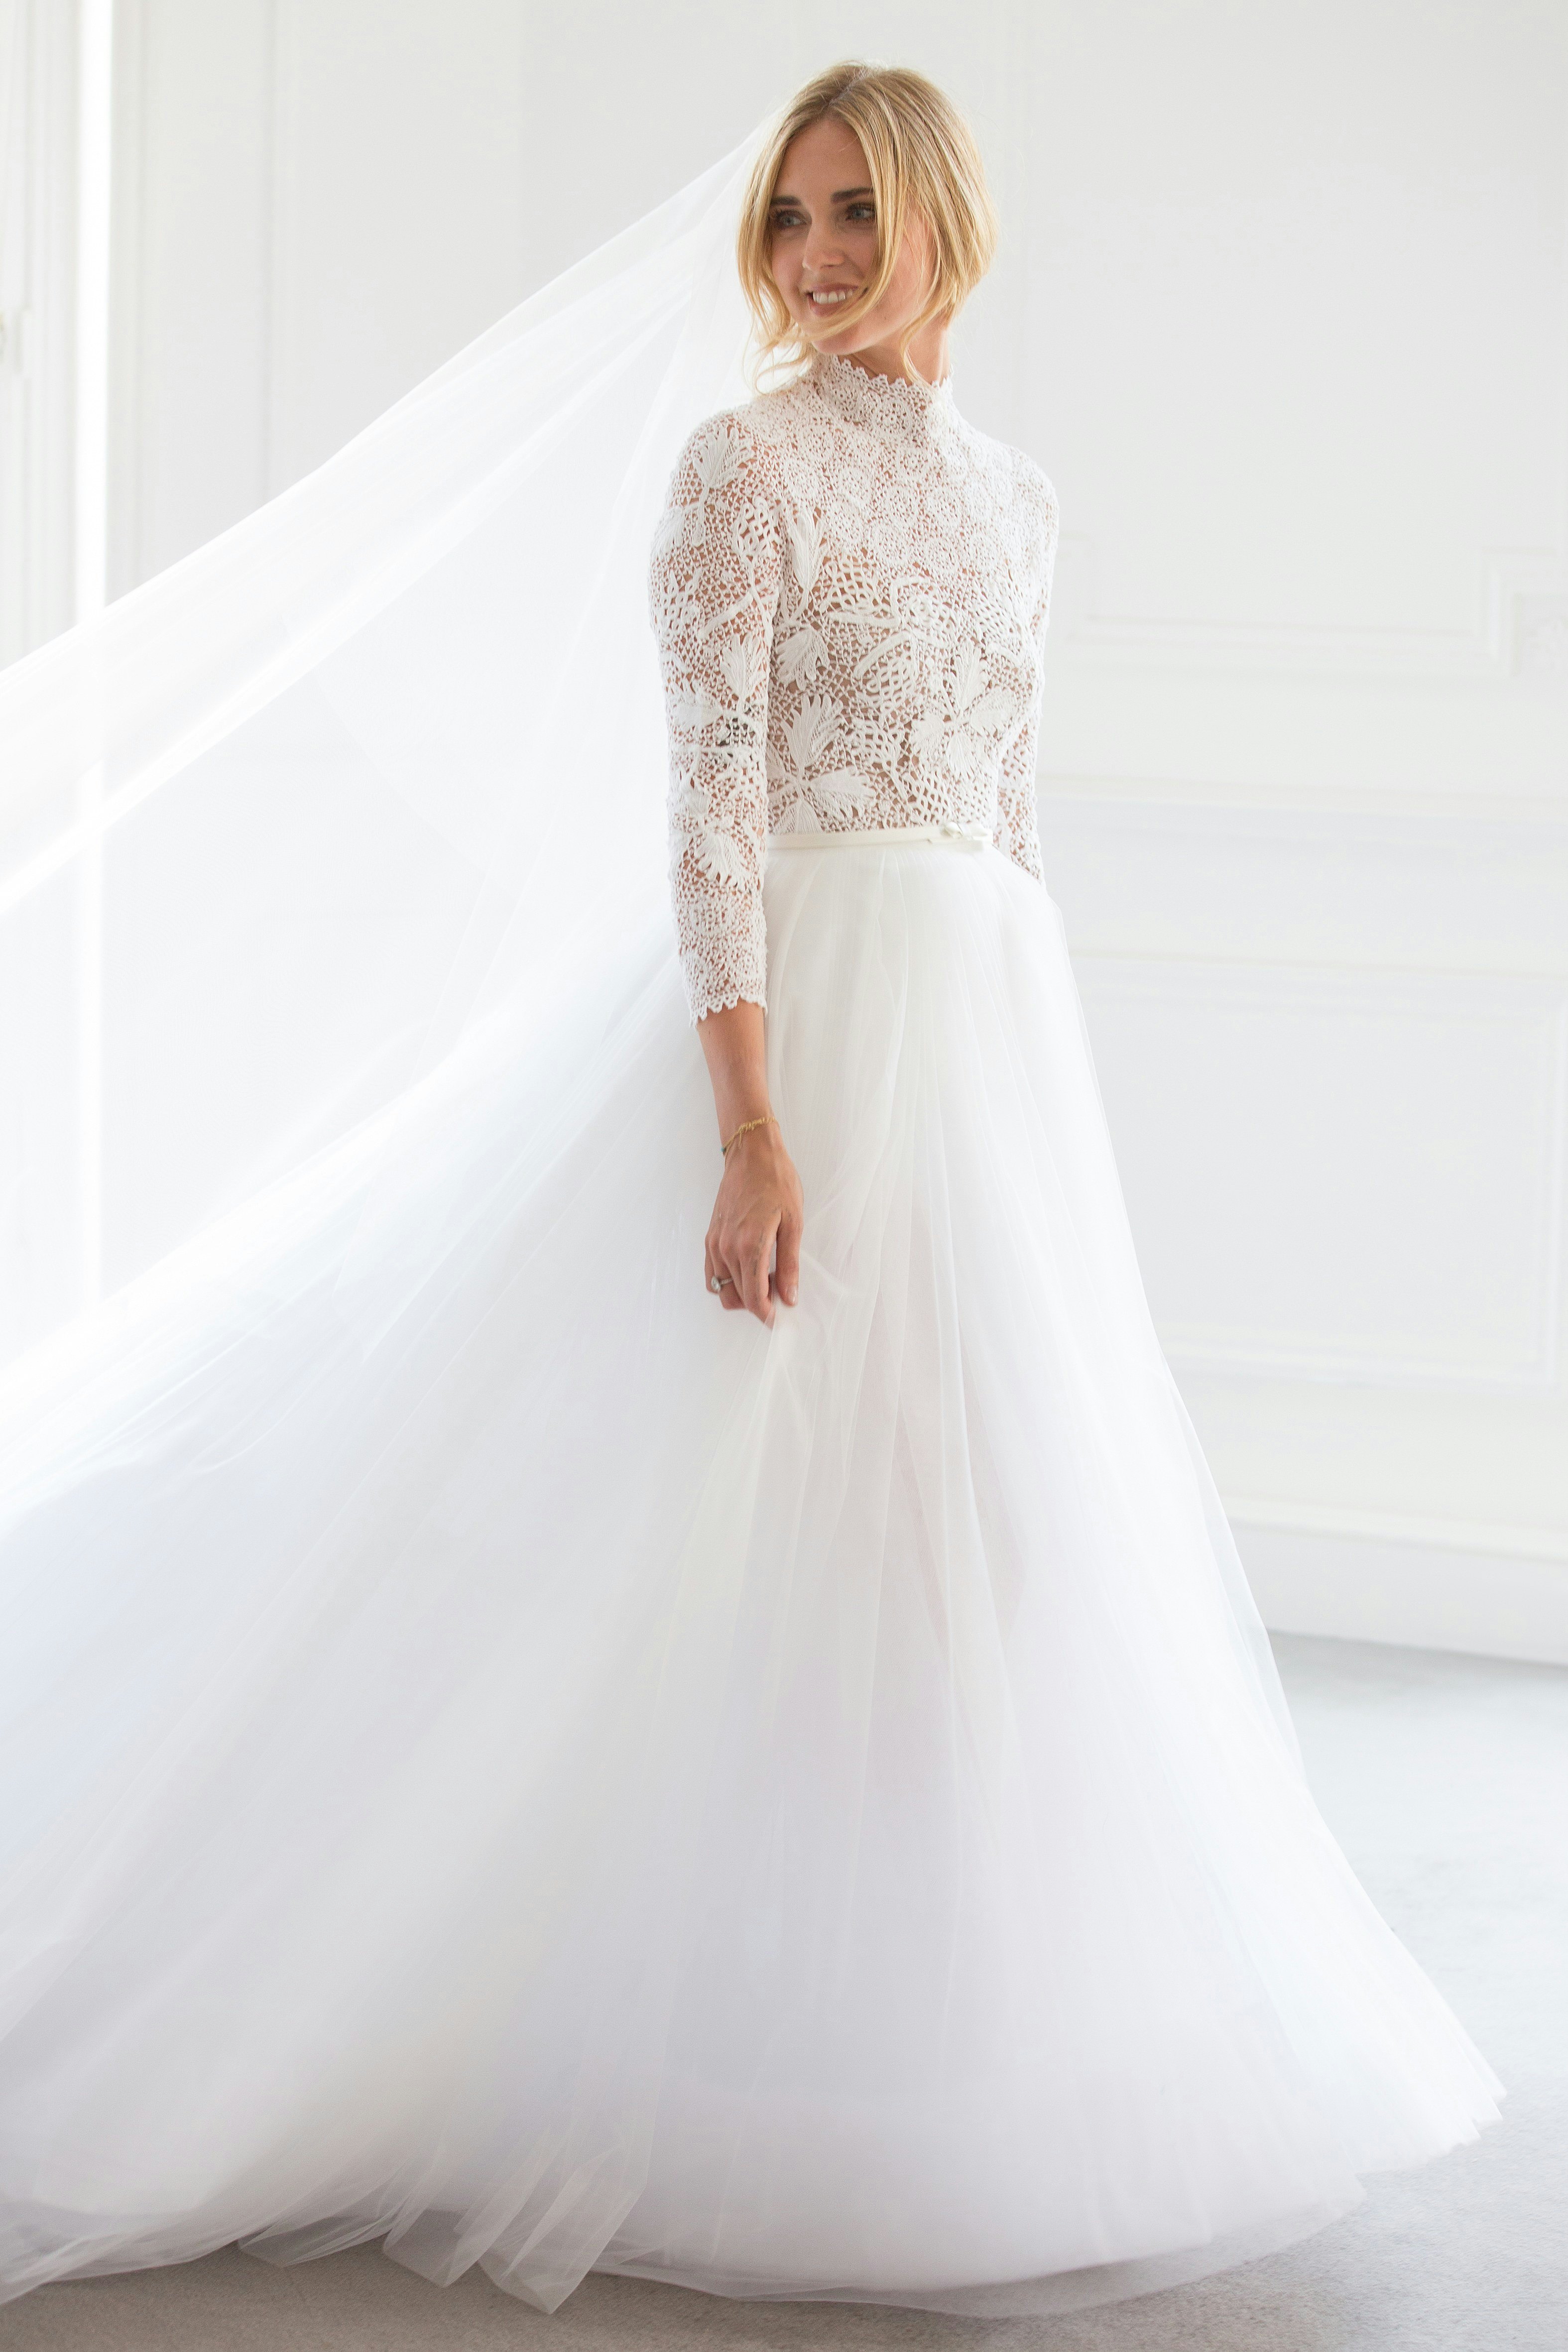 Chiara Ferragni's Wedding Dresses ...